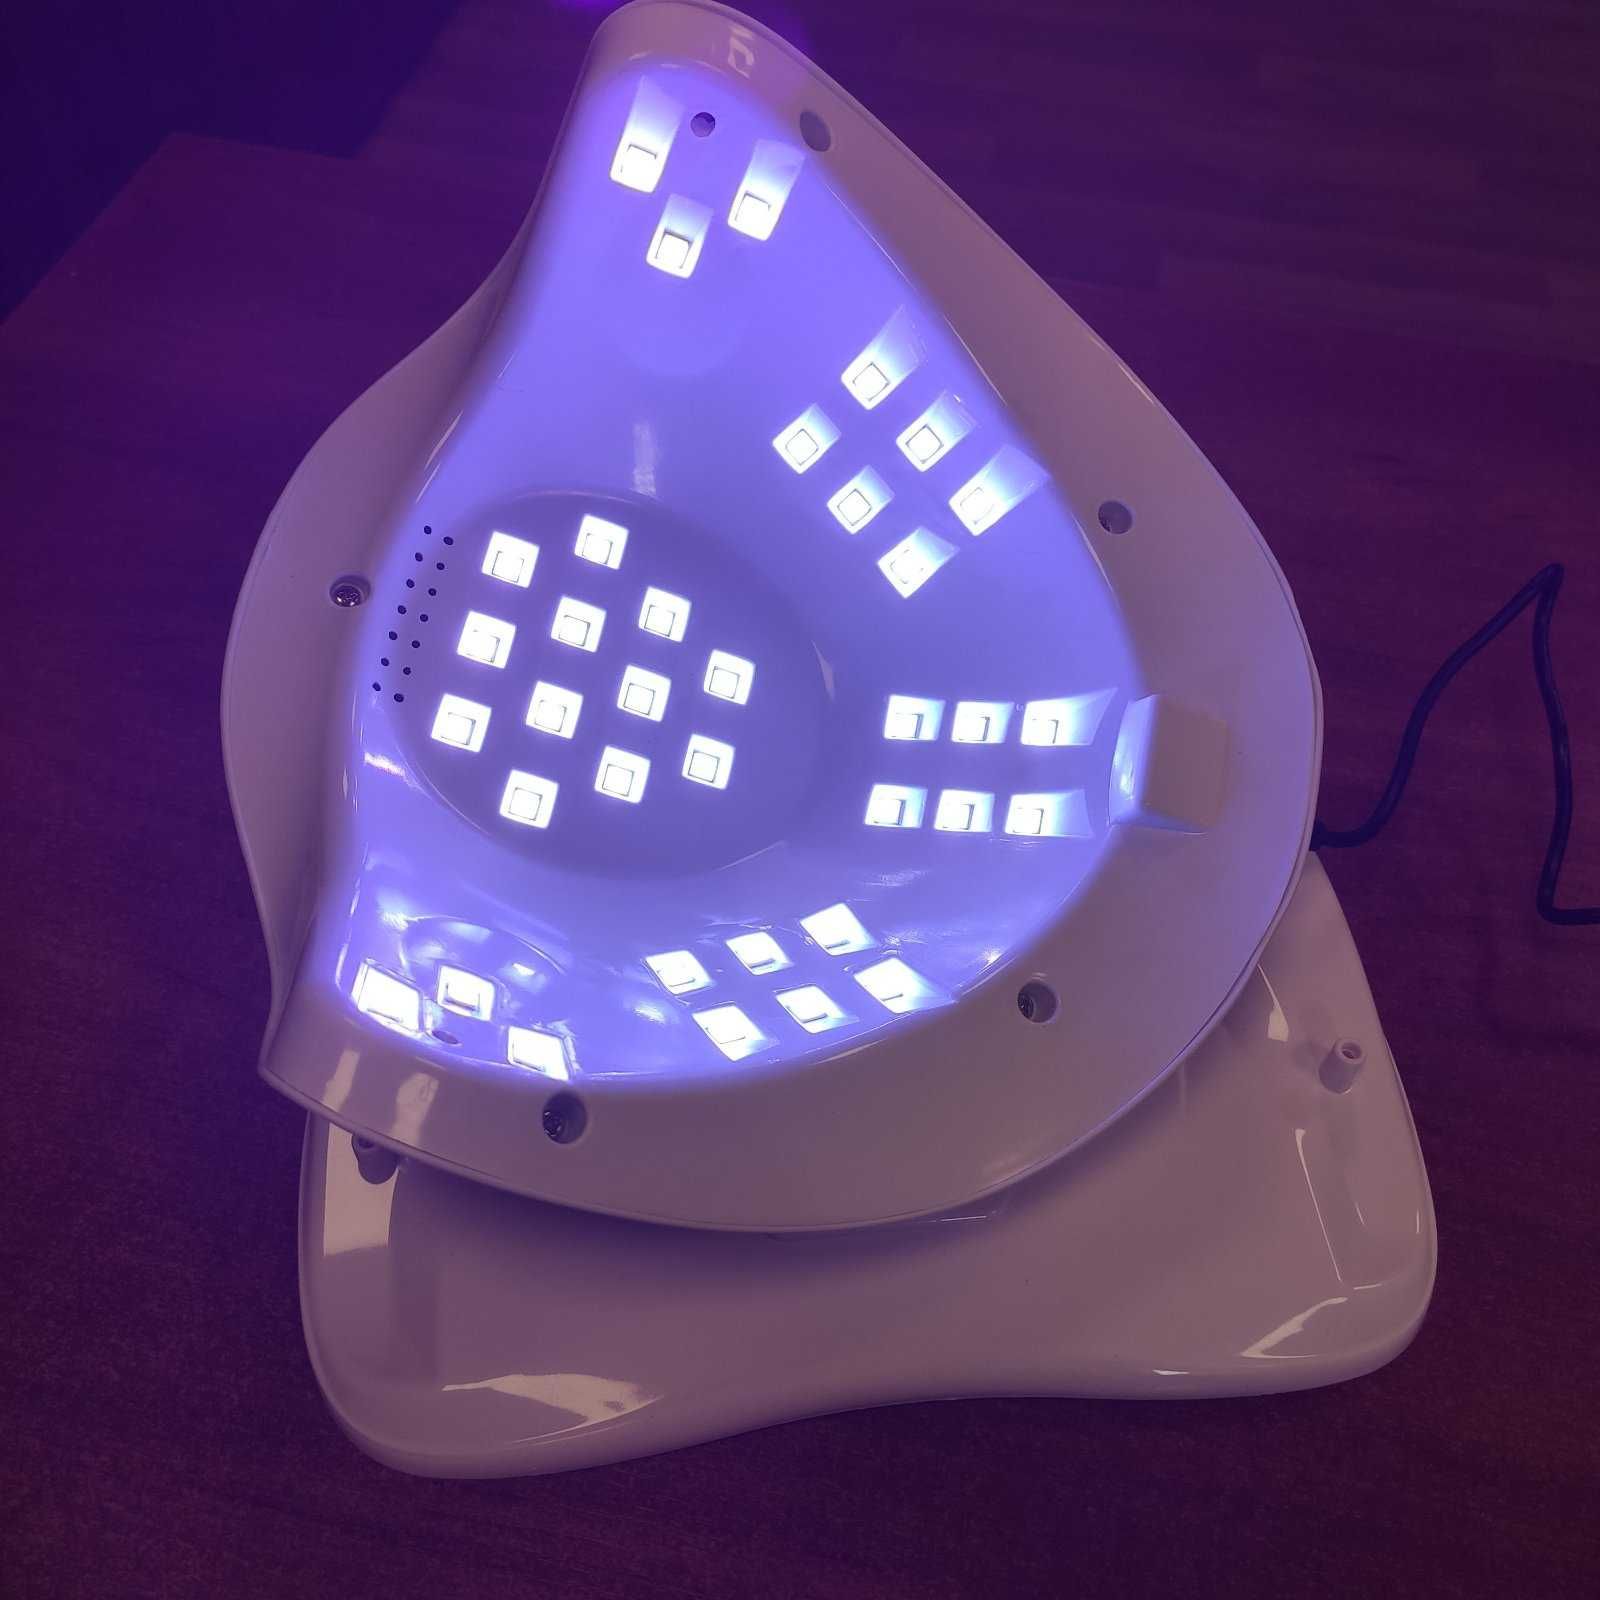 LED UV лед уф лампа SUN X 54вт для наращивания ногтей, гель лак Белая